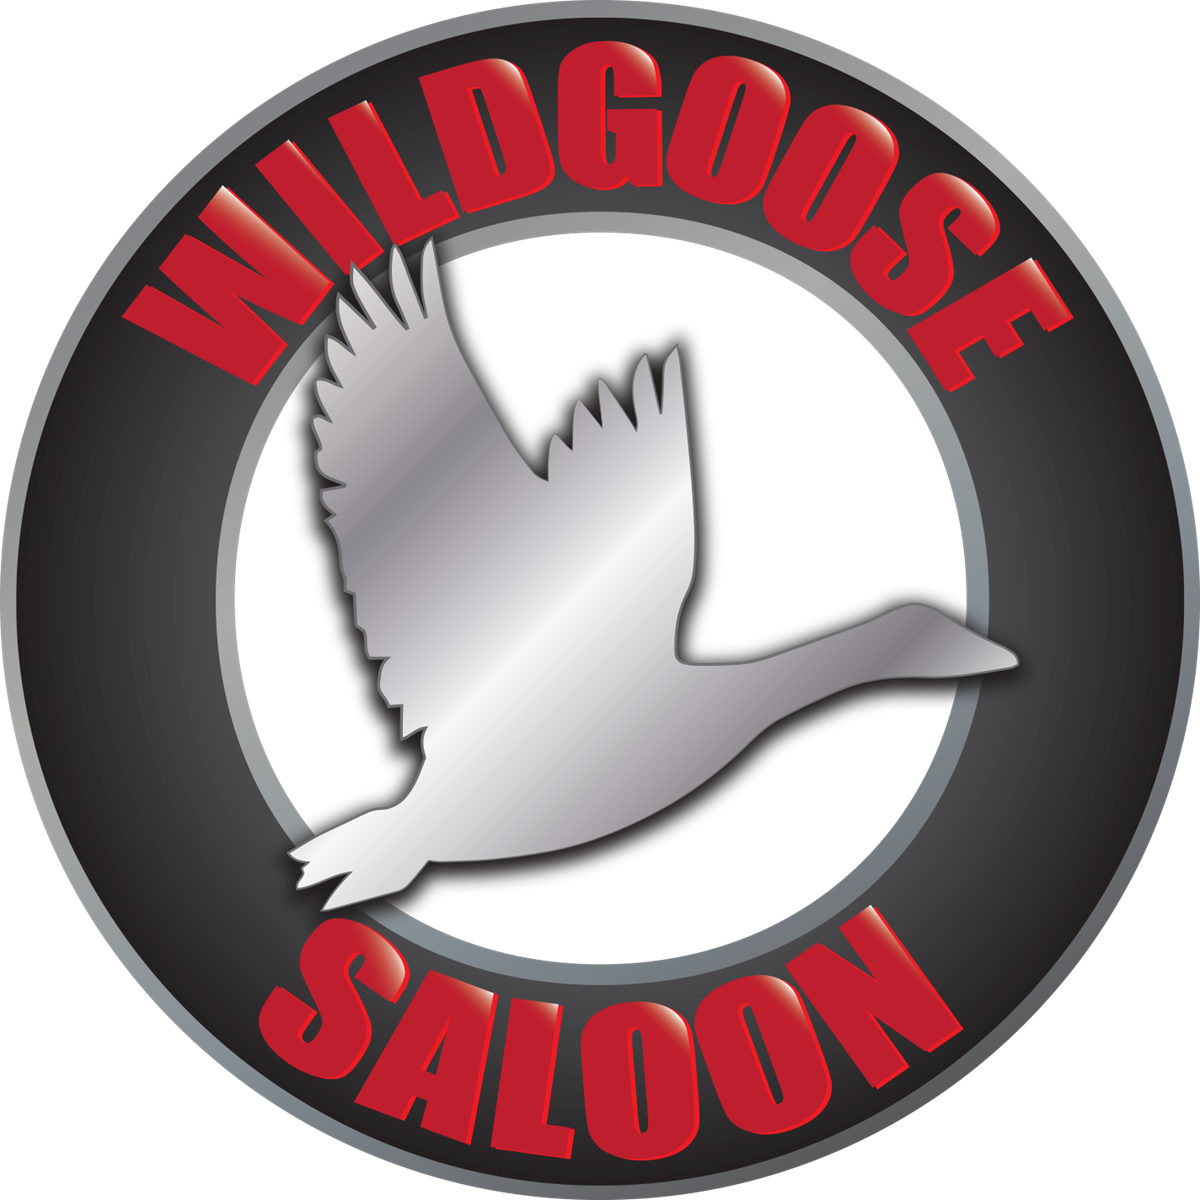 Wild Goose Saloon - Homepage